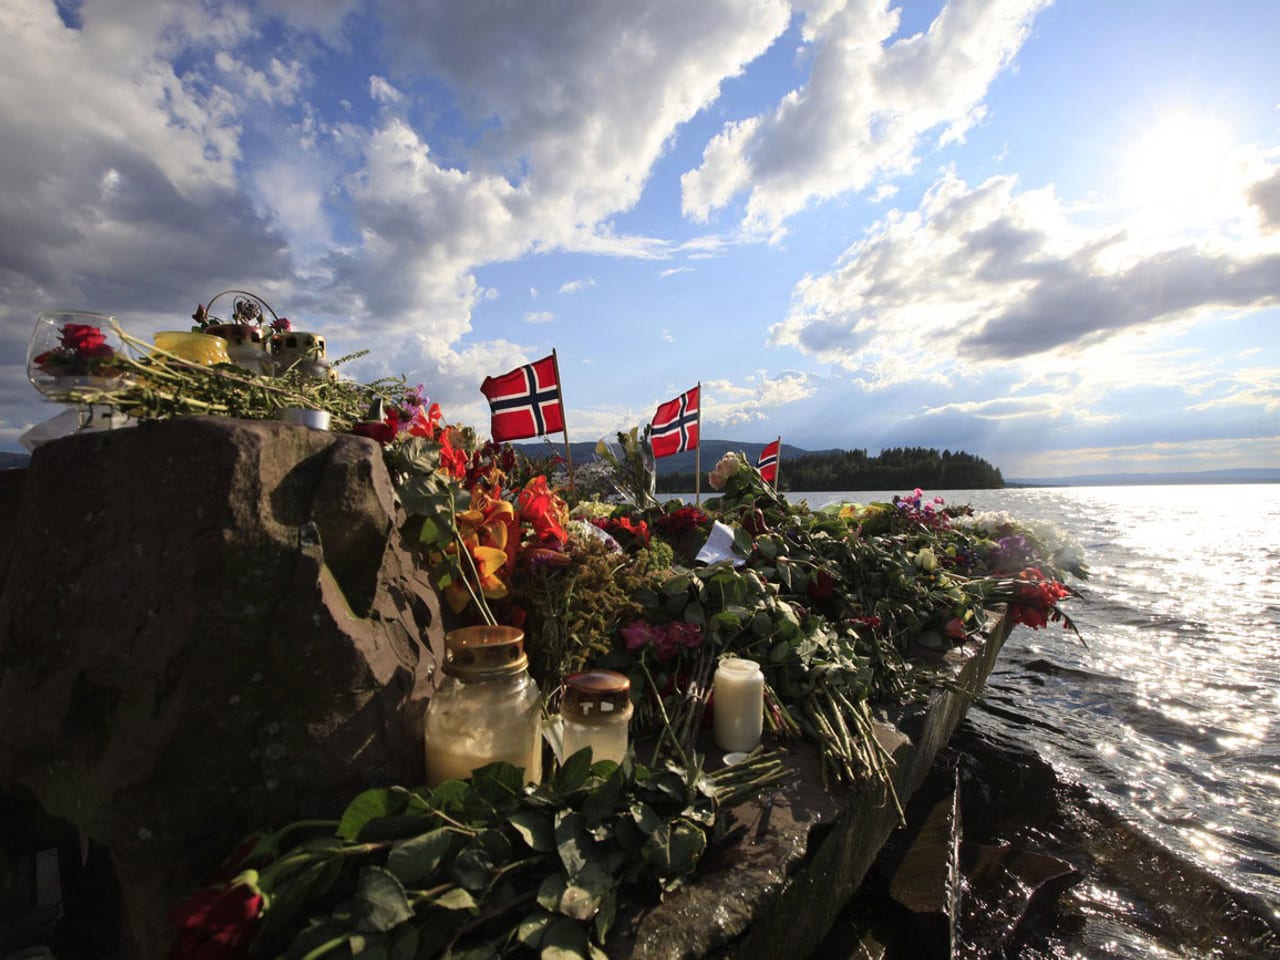 International - Norwegen gedenkt Utøya-Opfern - News - SRF